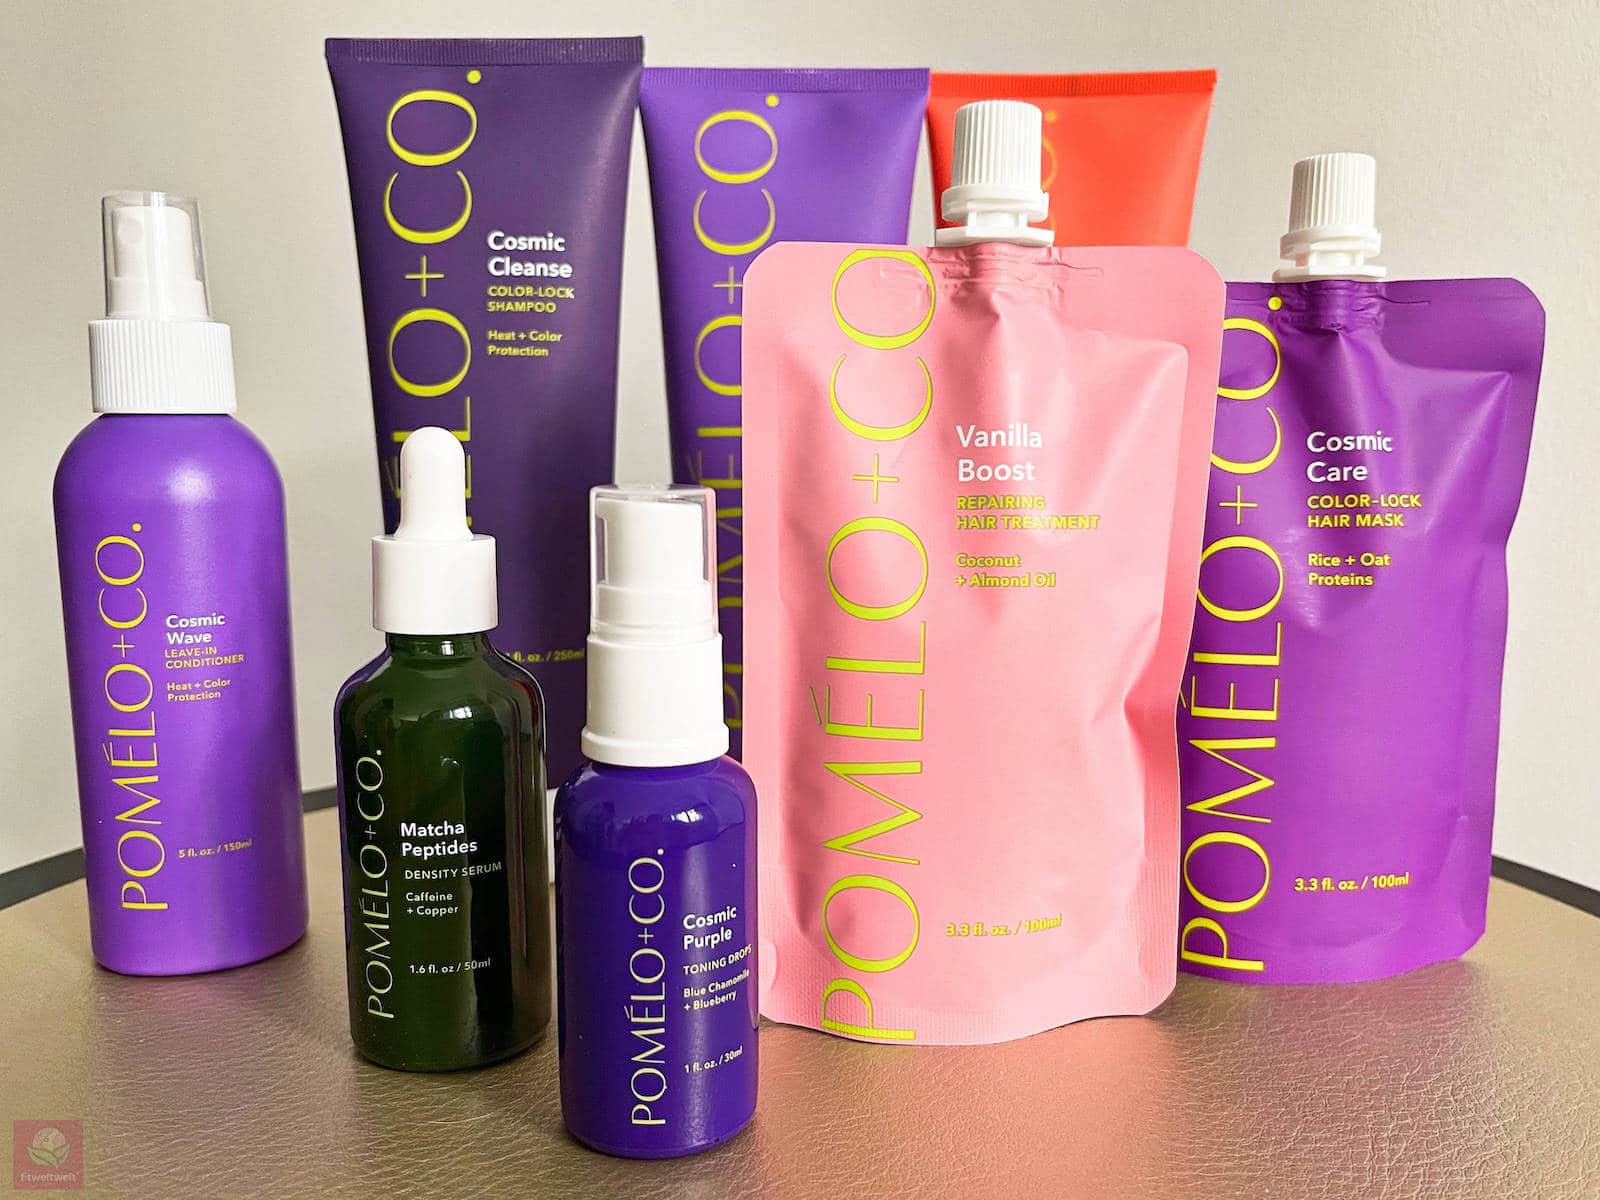 POMELO CO ERFAHRUNGEN Sortiment Shampoo Anwendung Vanila Boost kaufen